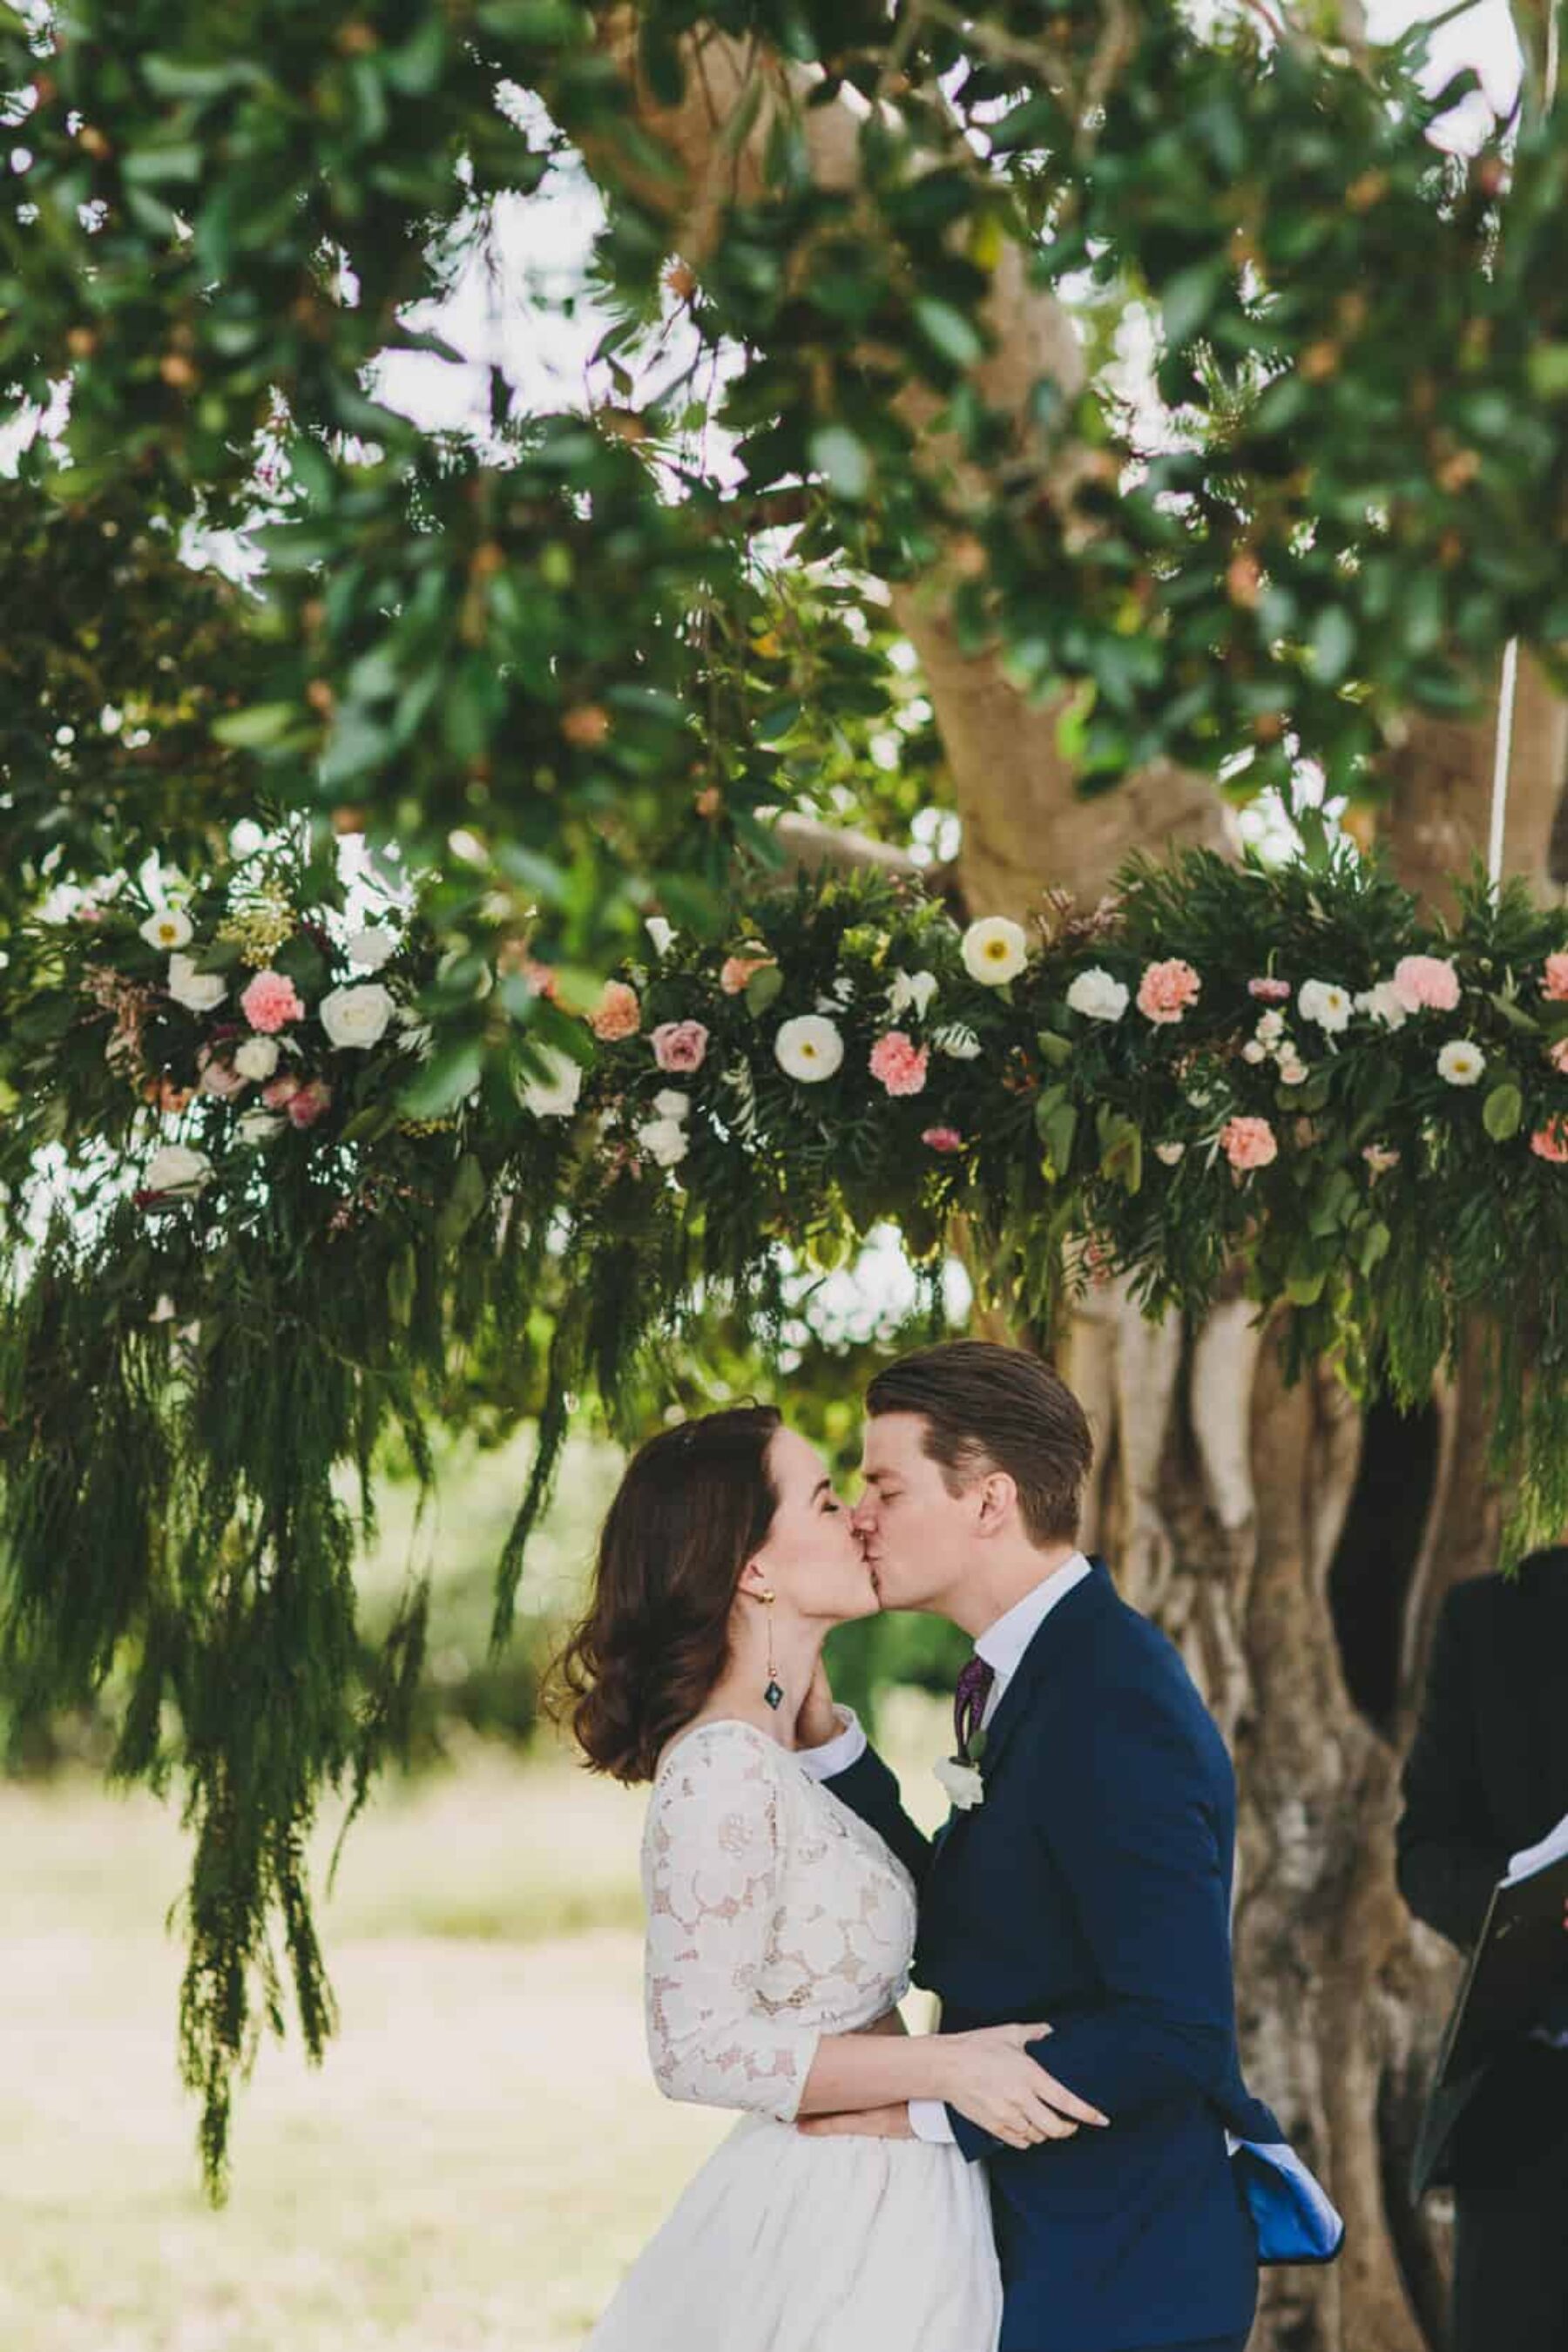 poppy and foliage wedding arch